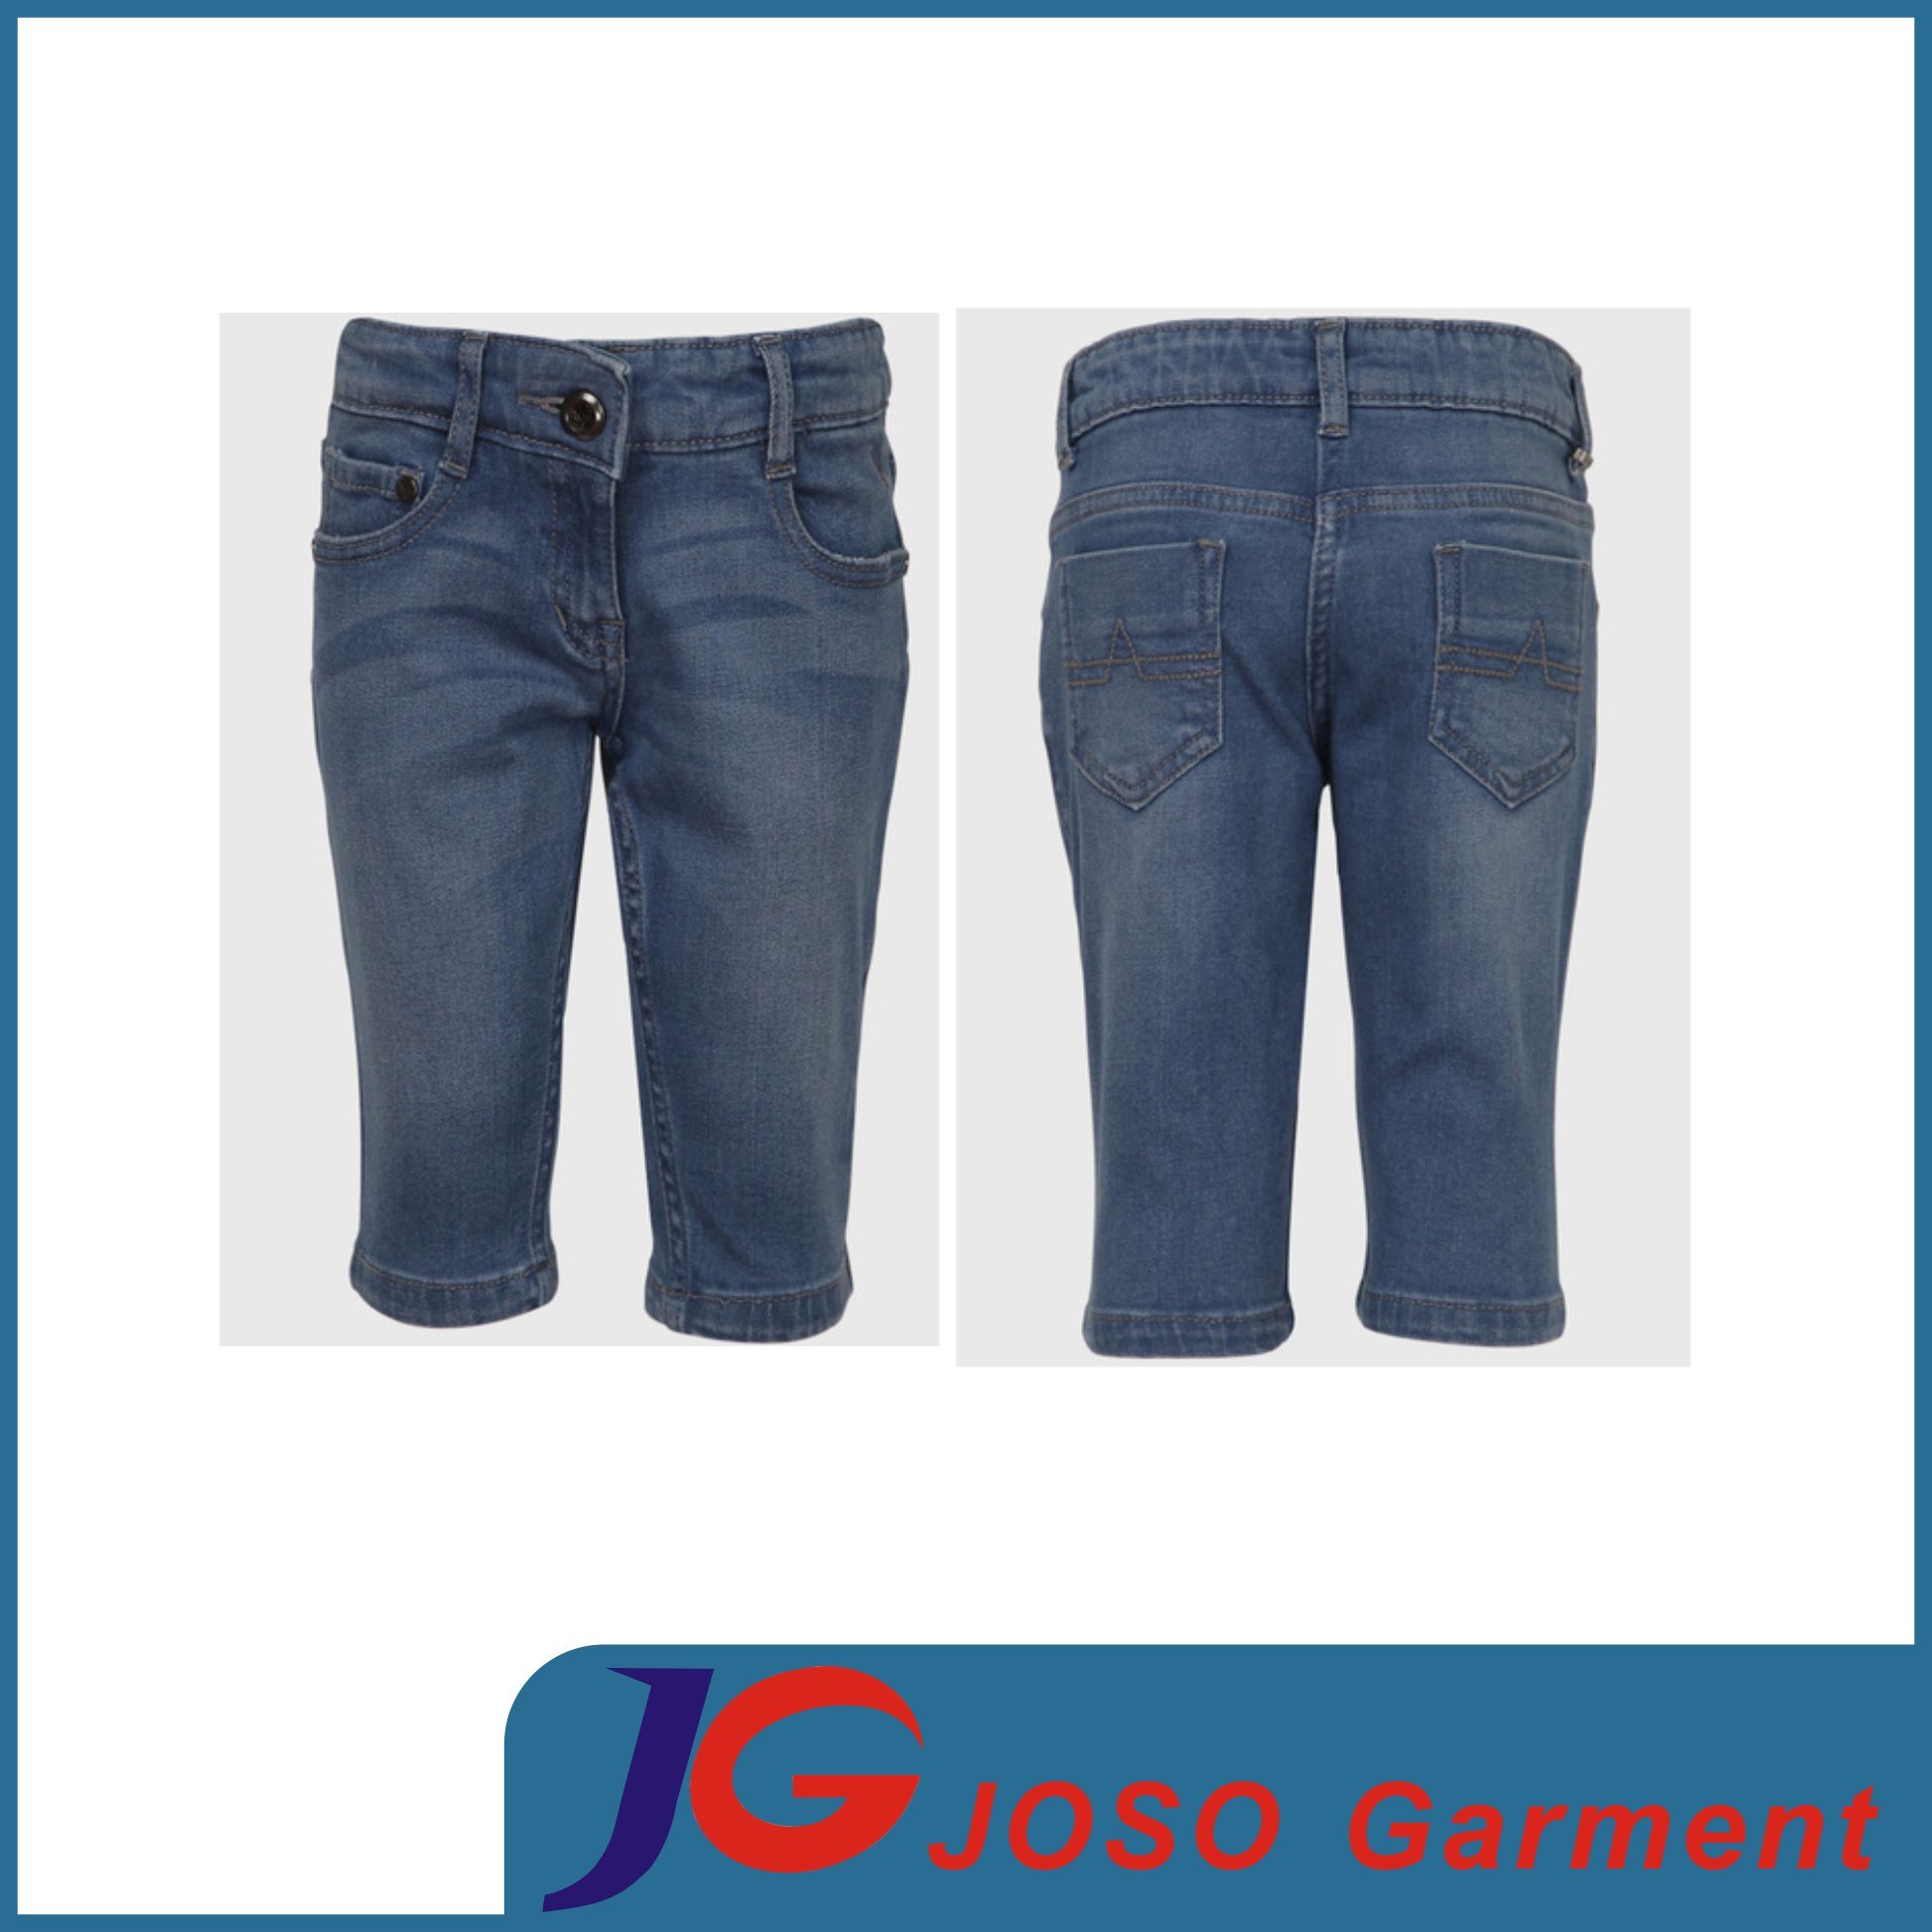 Kids Jeans Baby Clothing Half Jeans Boy Pants (JC8050)